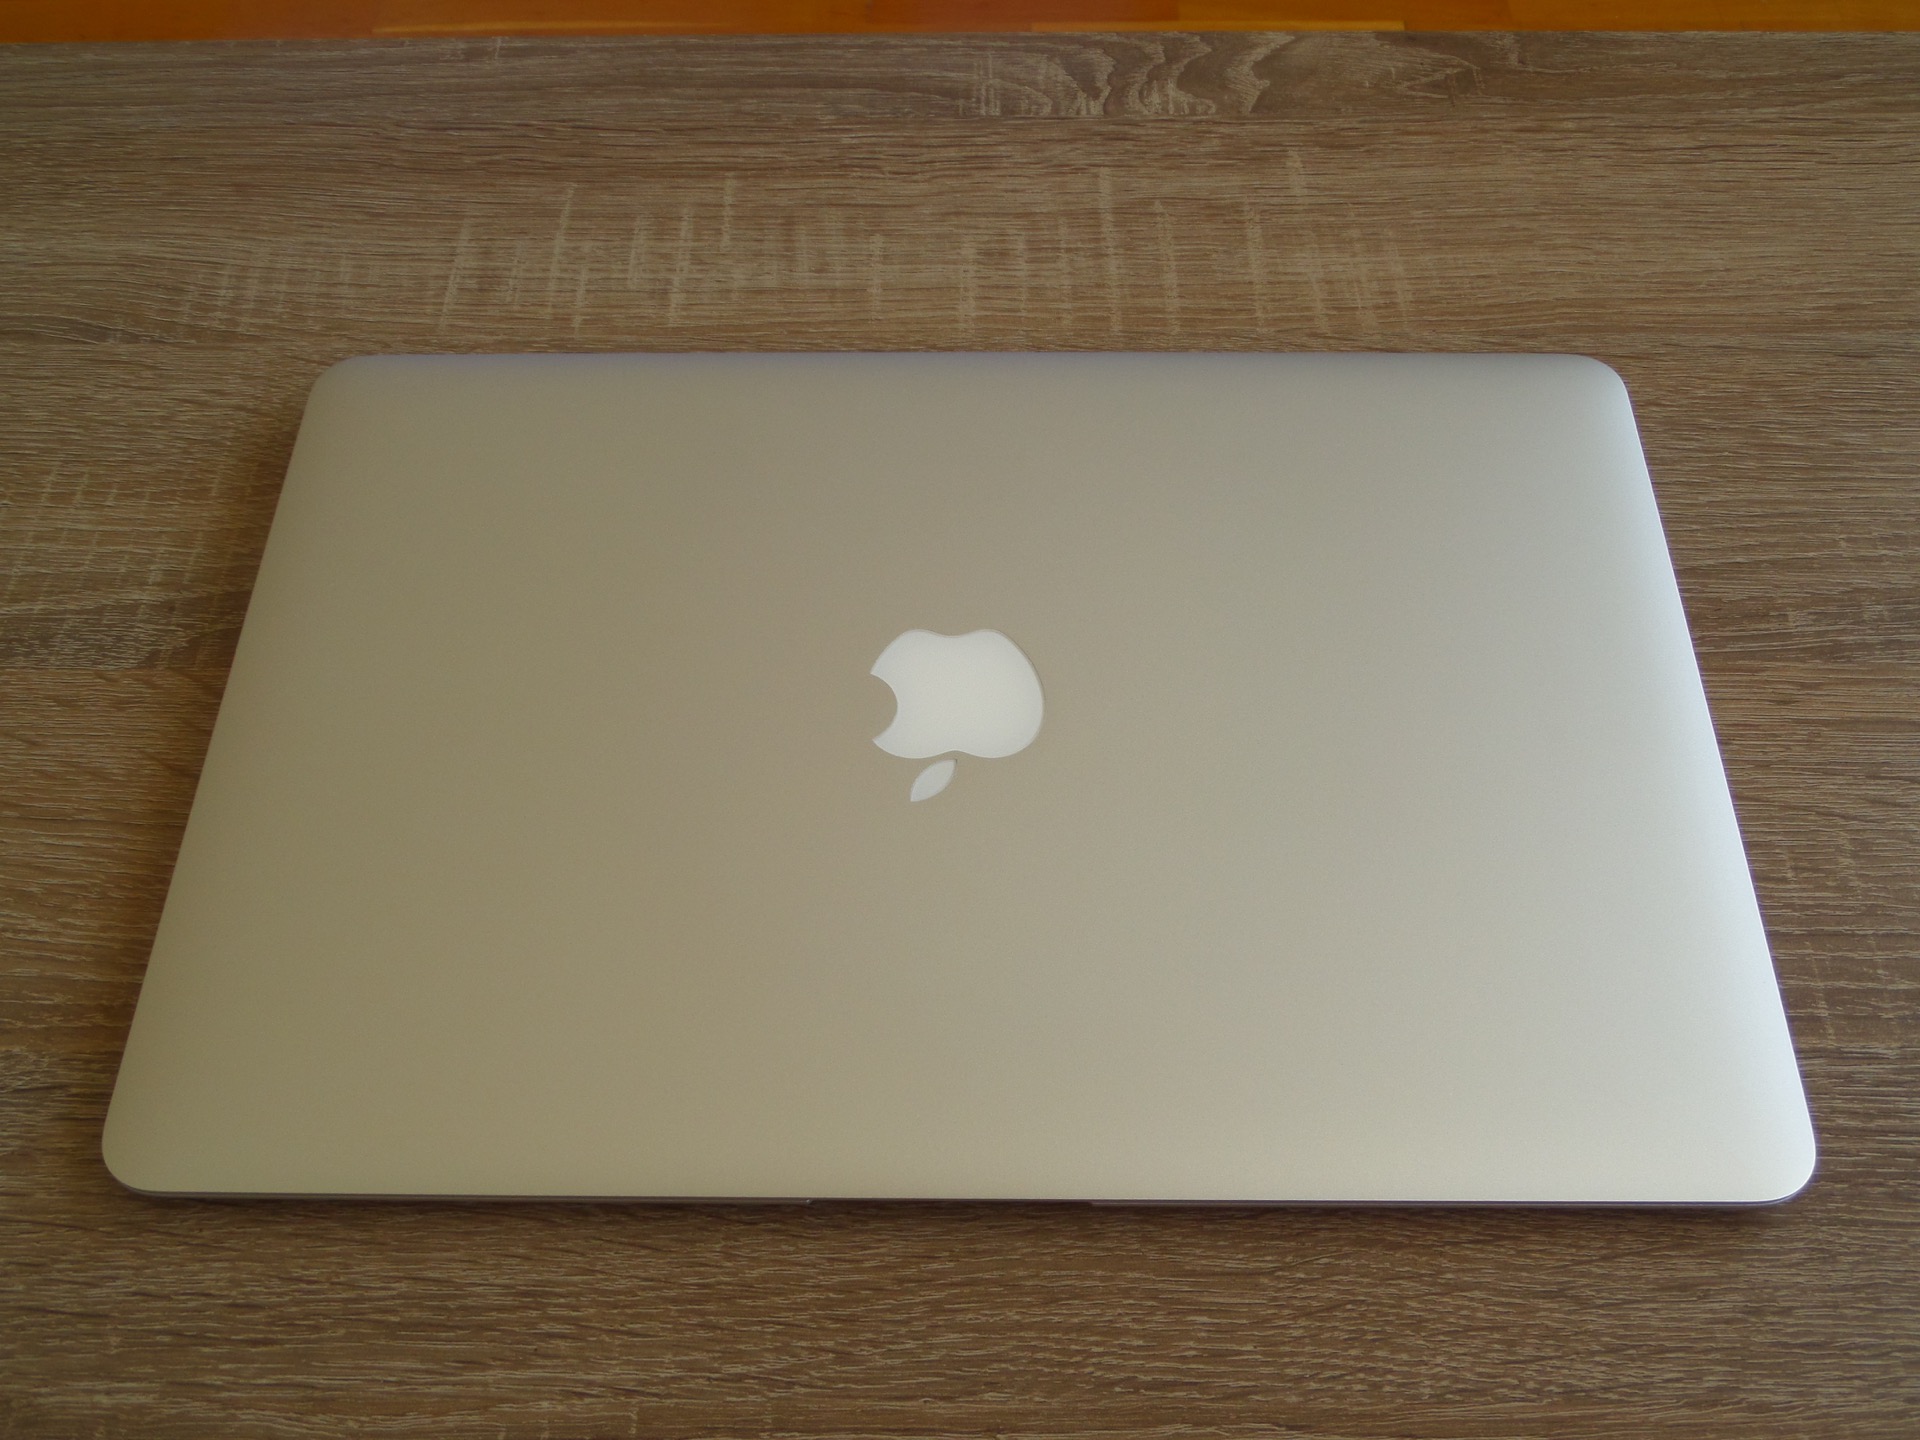 Apple MacBook Air 13 2016 vs Asus Zenbook UX360CA-C4187T teszt